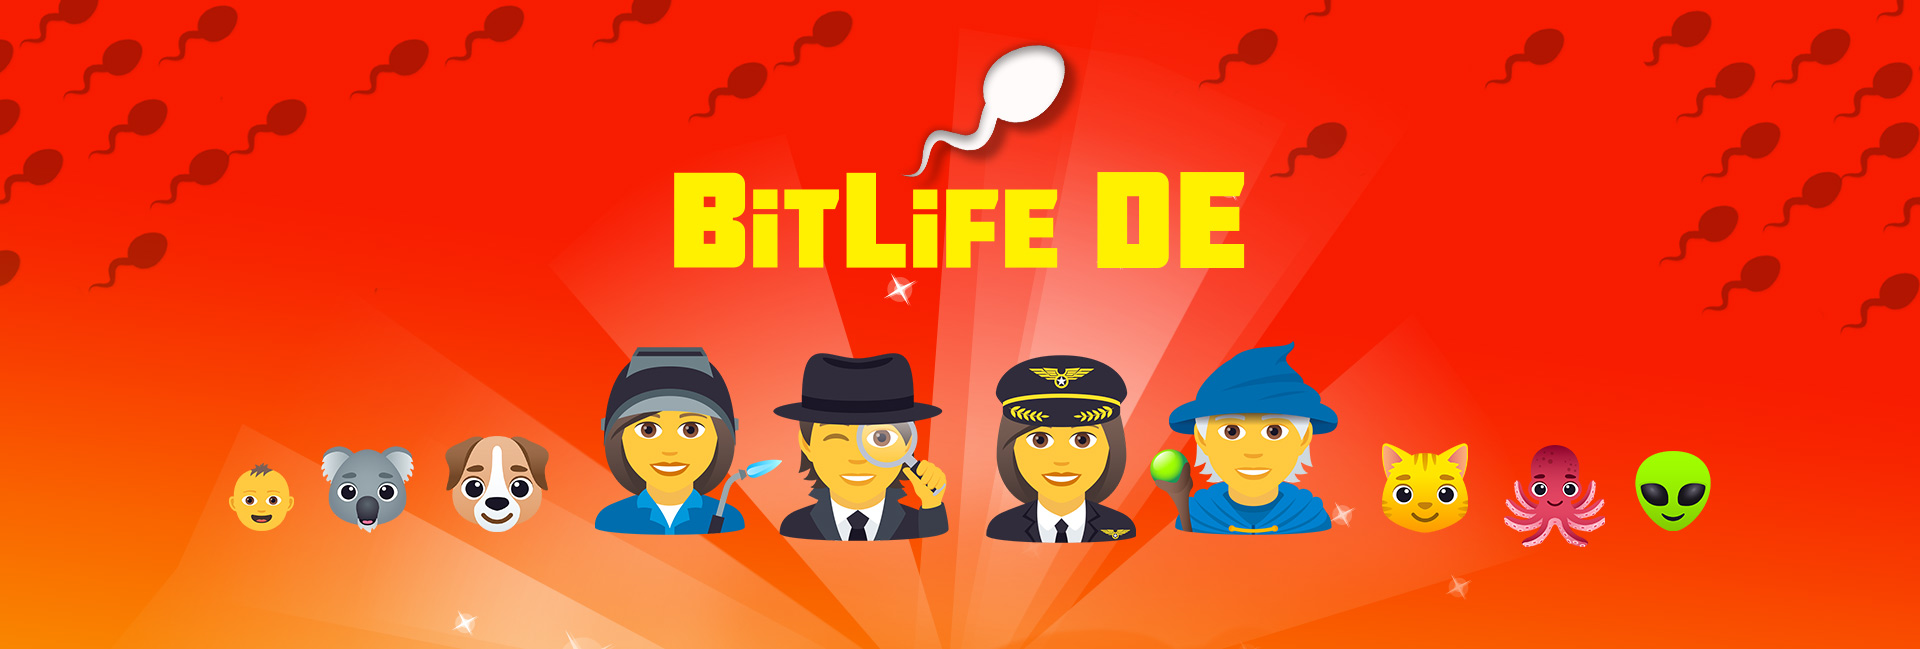 BitLife DE - Lebenssimulation | Goodgame Studios